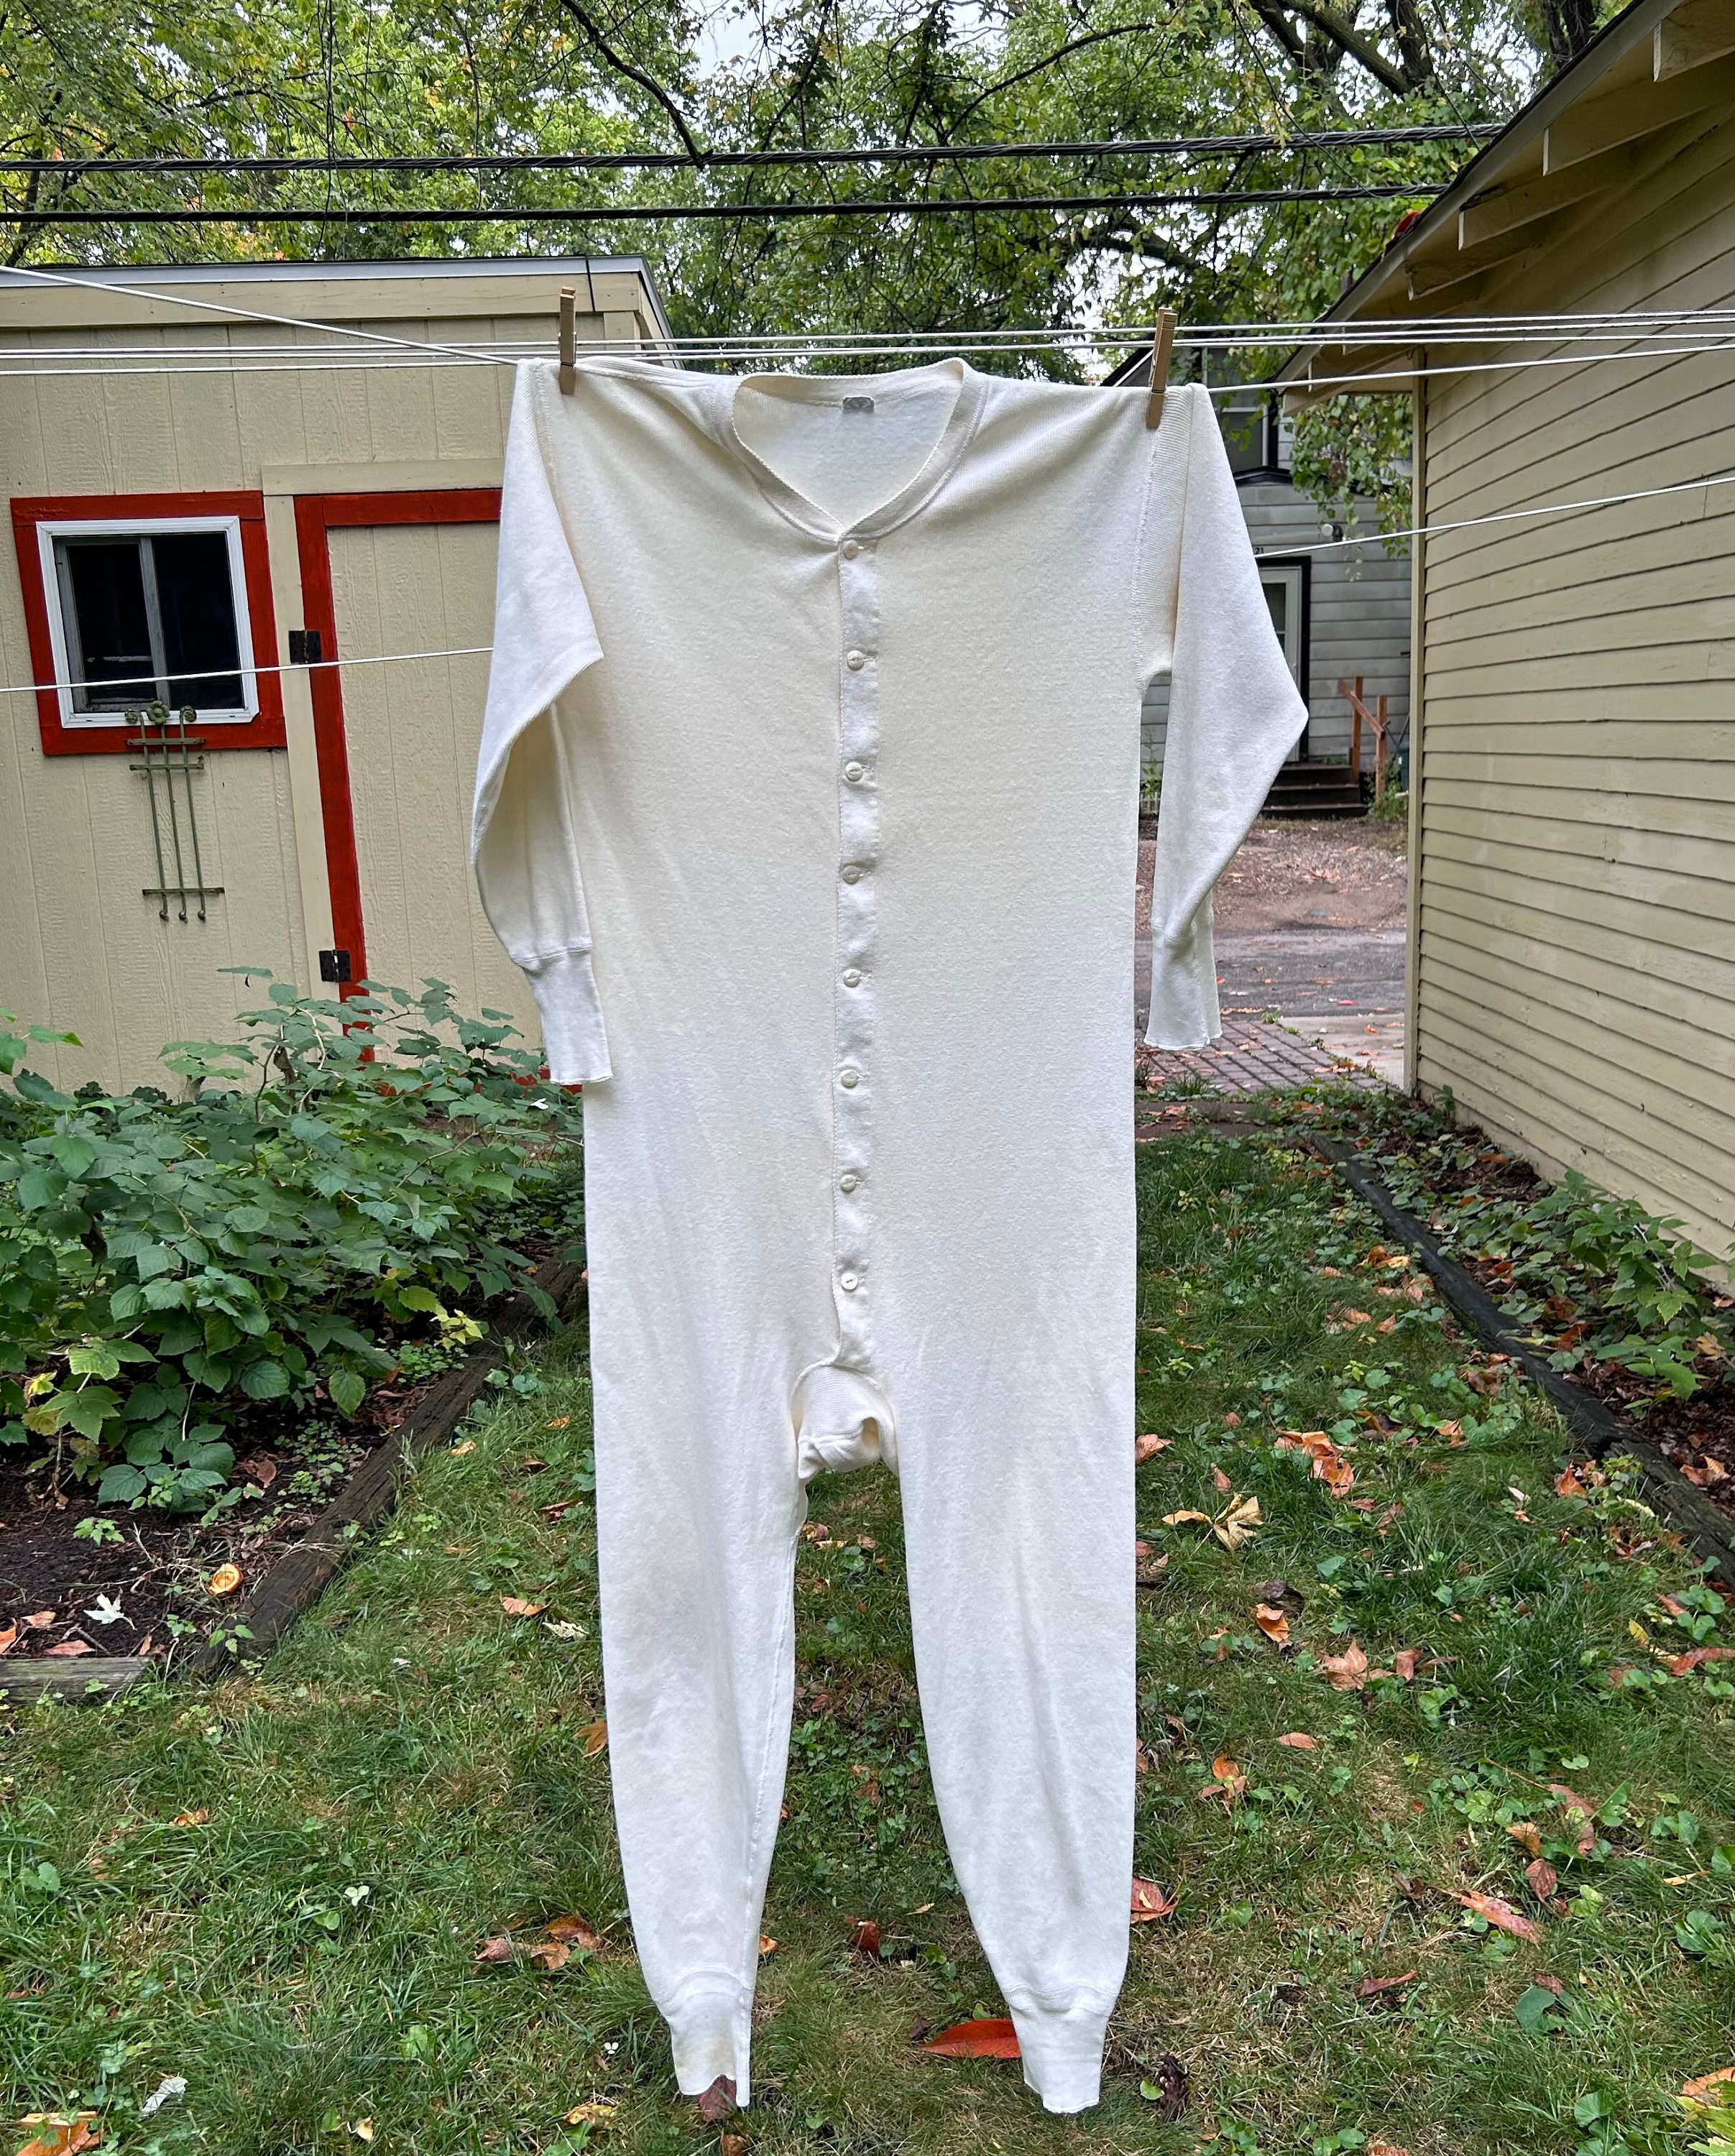 Vintage White Healthgard Long Underwear / Union Suit / Long Johns